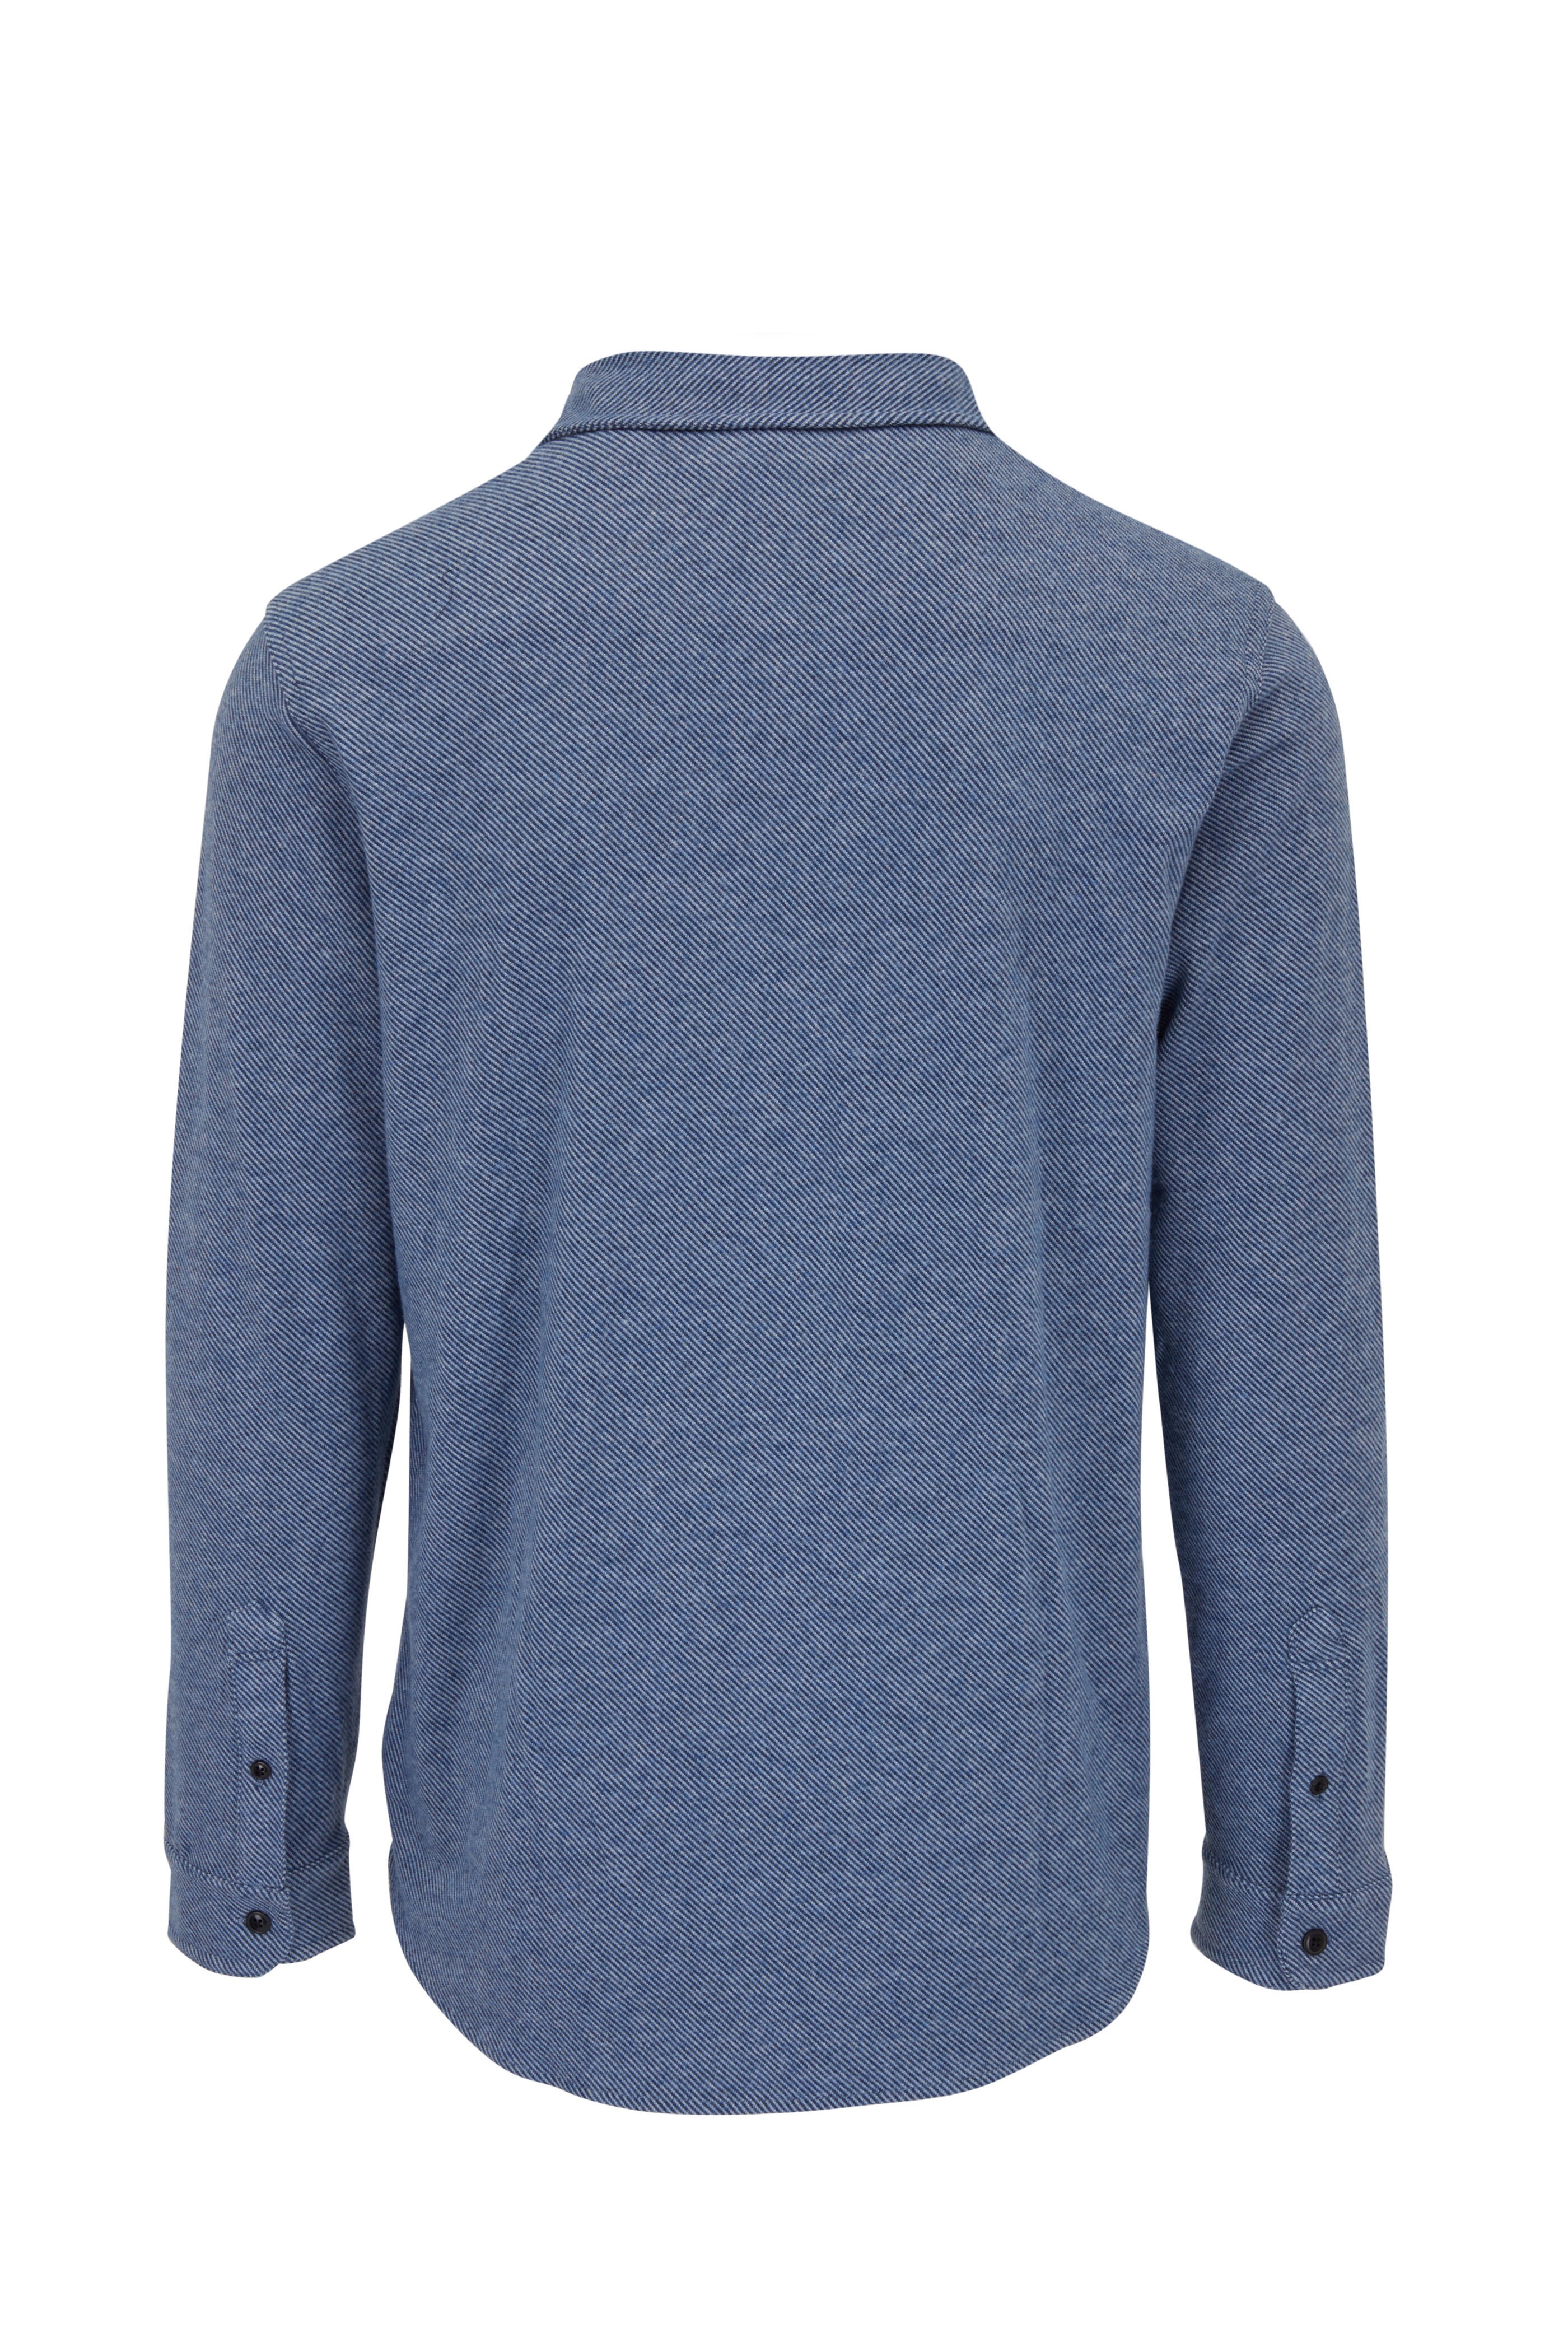 Faherty Brand - Legend™ Glacier Blue Twill Sweater Shirt